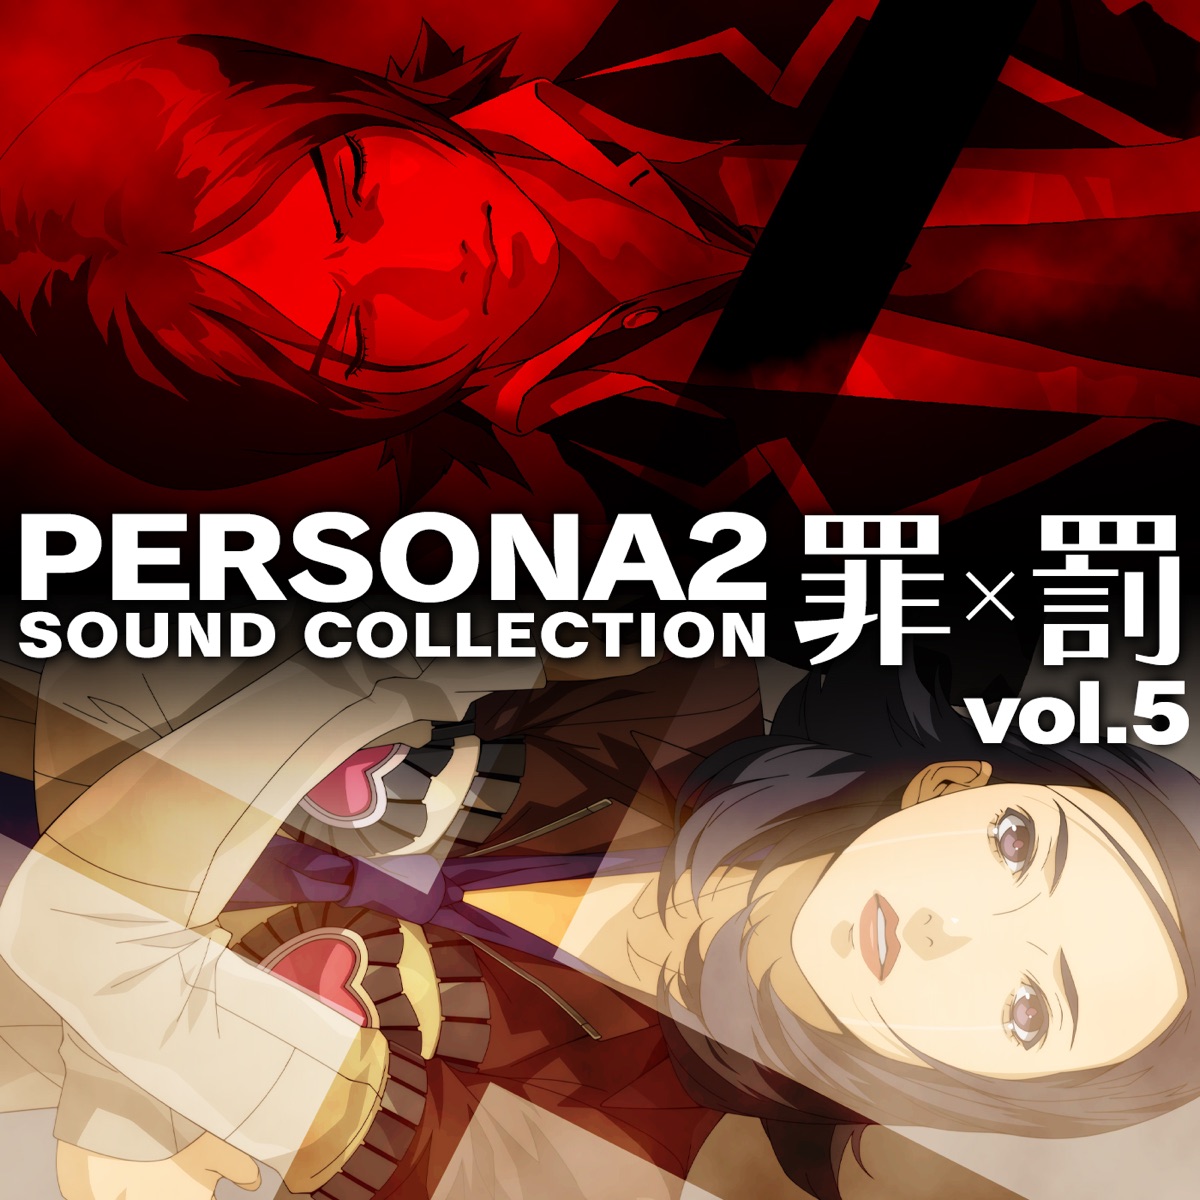 Persona 5 Strikers: Original Soundtrack - Album by Lyn